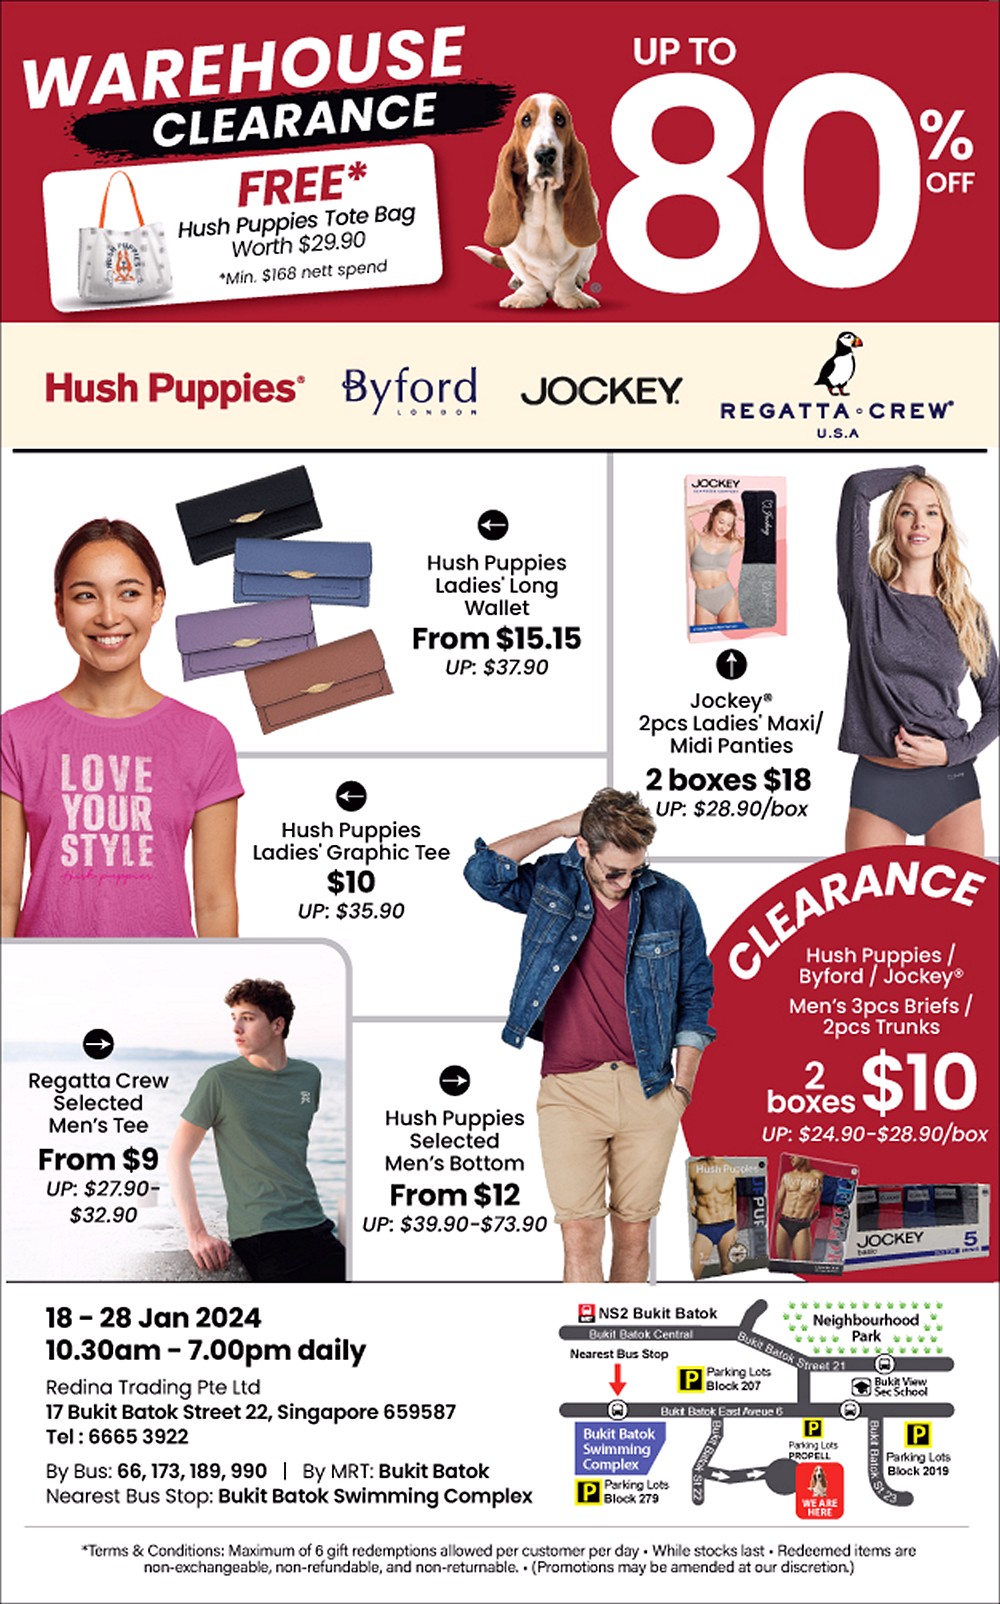 hussh Women's Fashion Brands Warehouse Sale - Up to 80% off — hussh